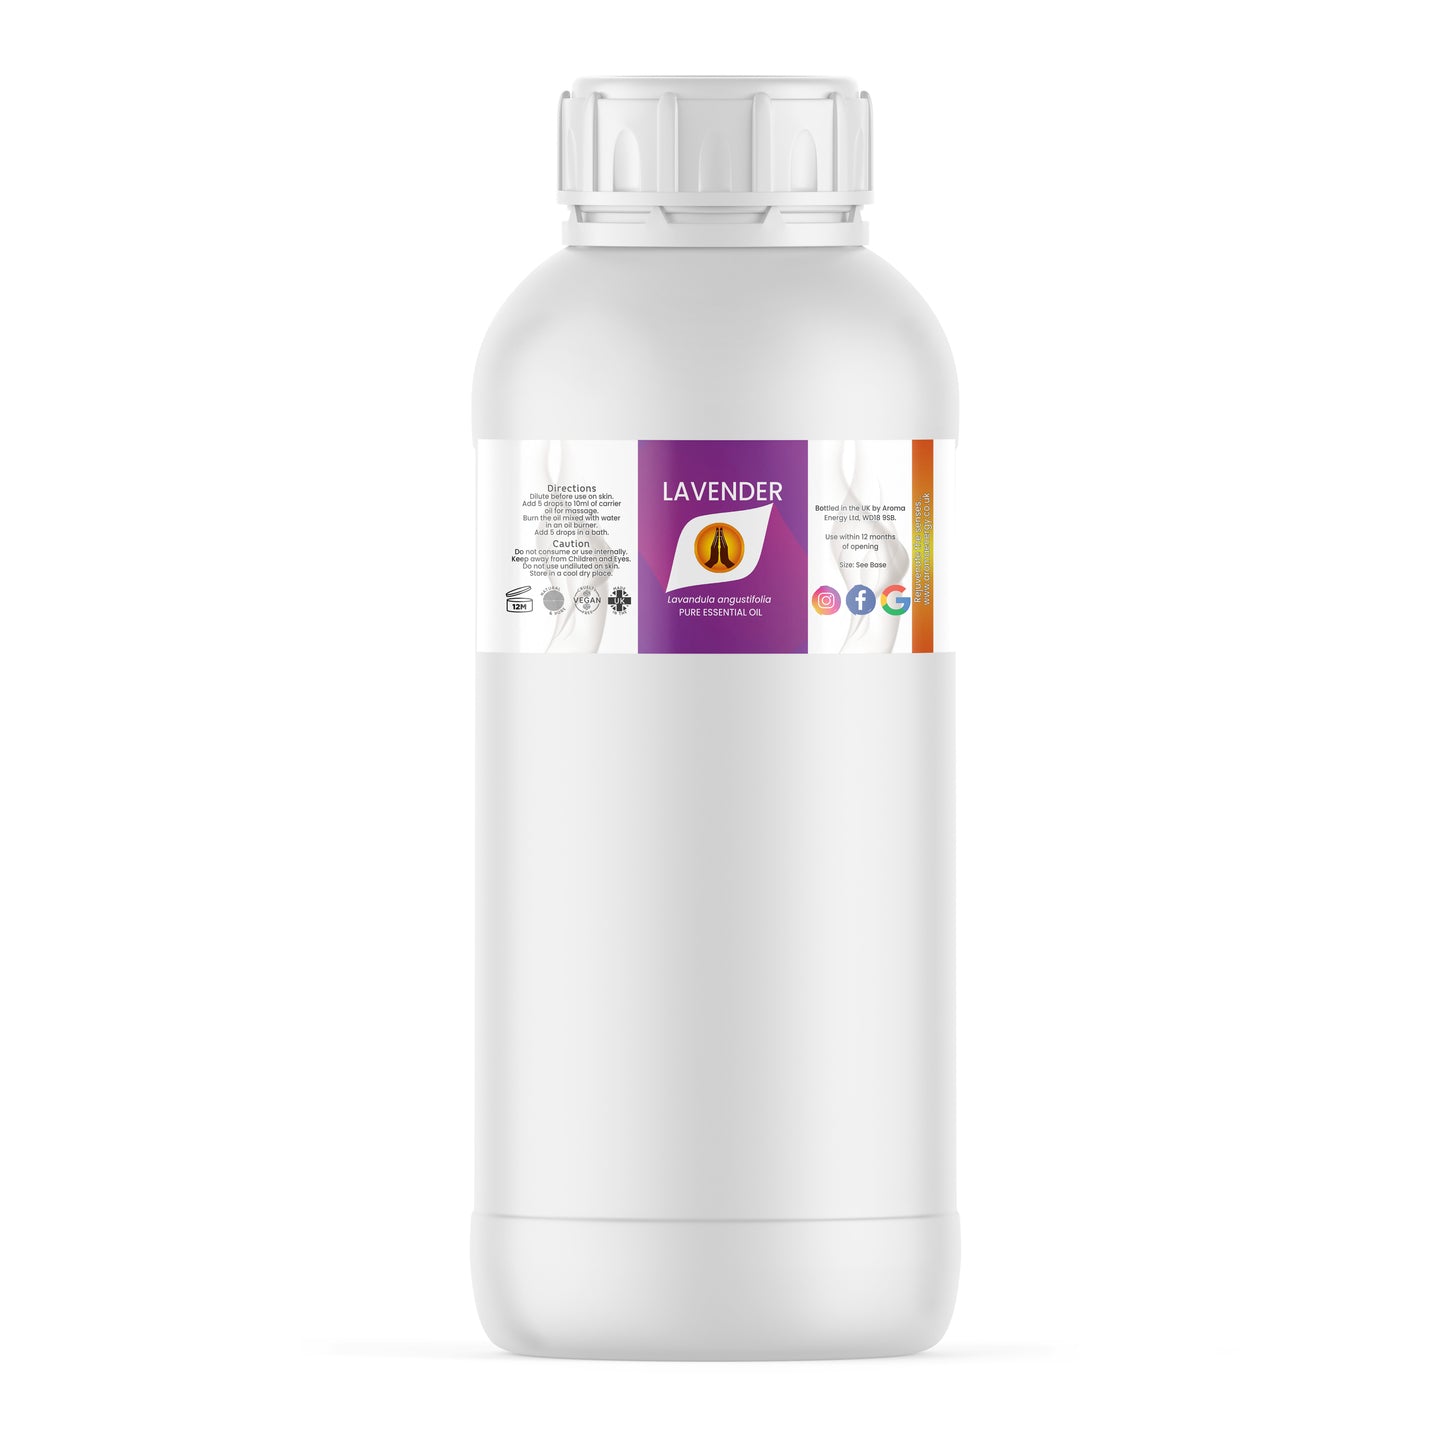 Lavender Pure Essential Oil - Aroma Energy